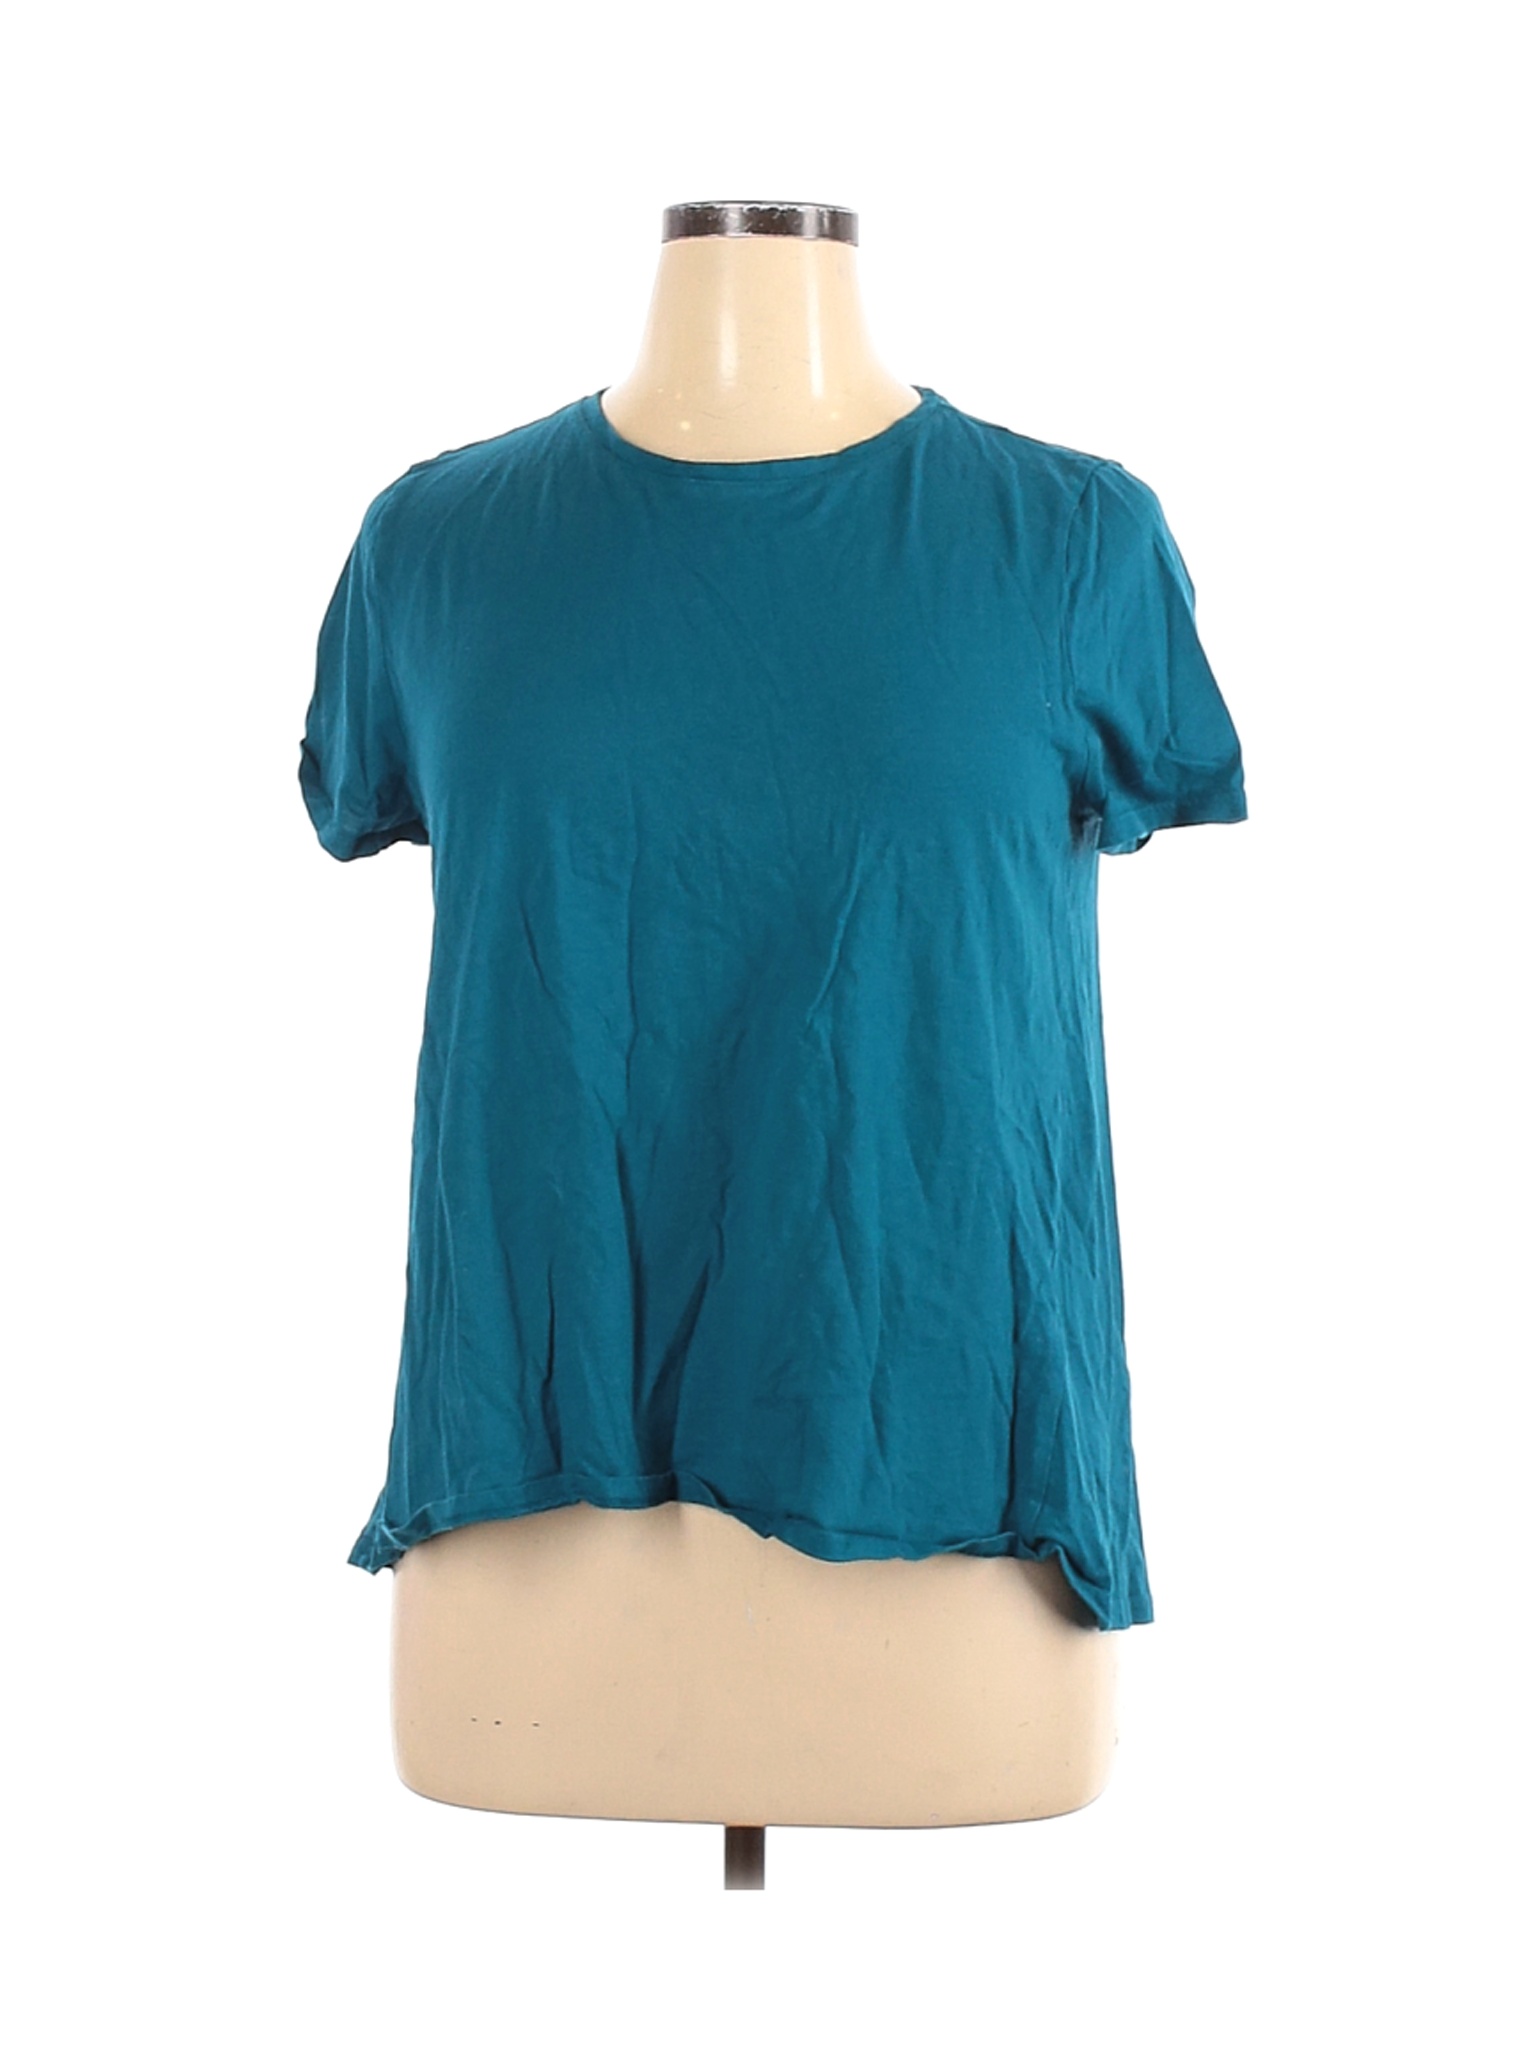 Joe Fresh Women Green Short Sleeve T-Shirt XL | eBay